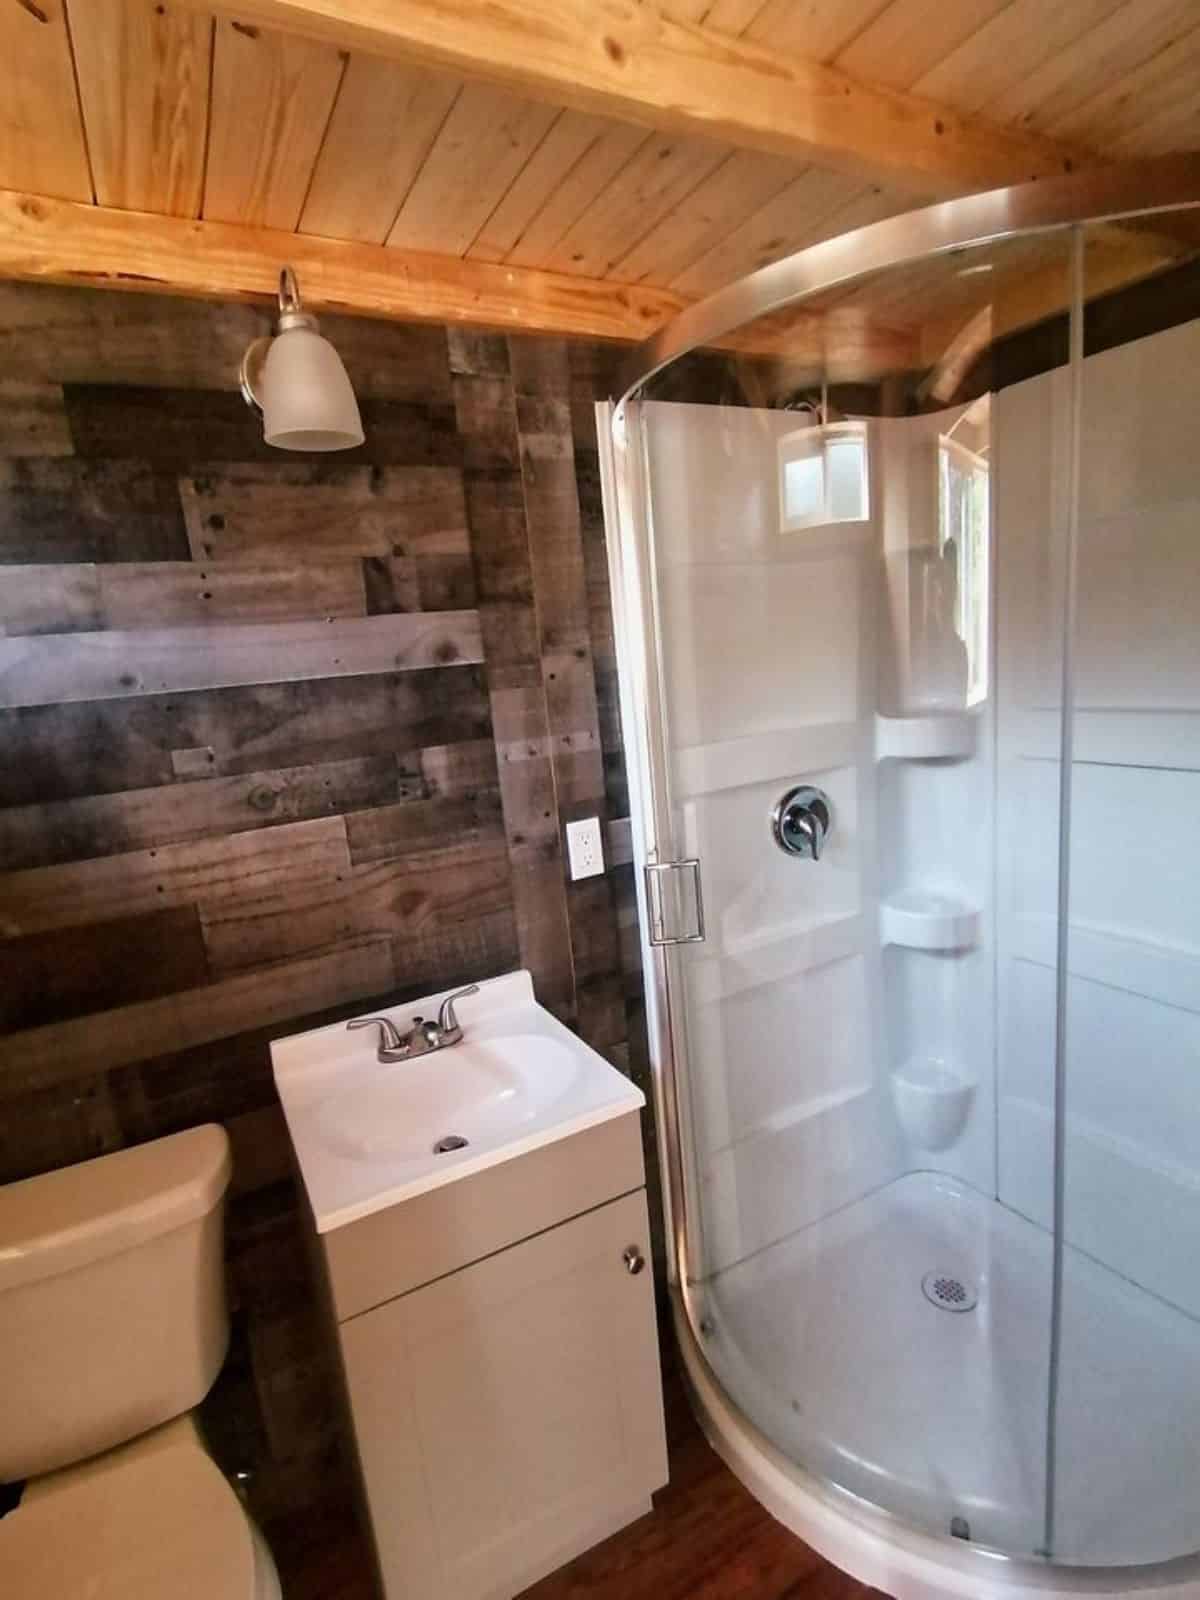 Standard toilet, sink with vanity and separate glass door shower in bathroom of Cozy Tiny Home